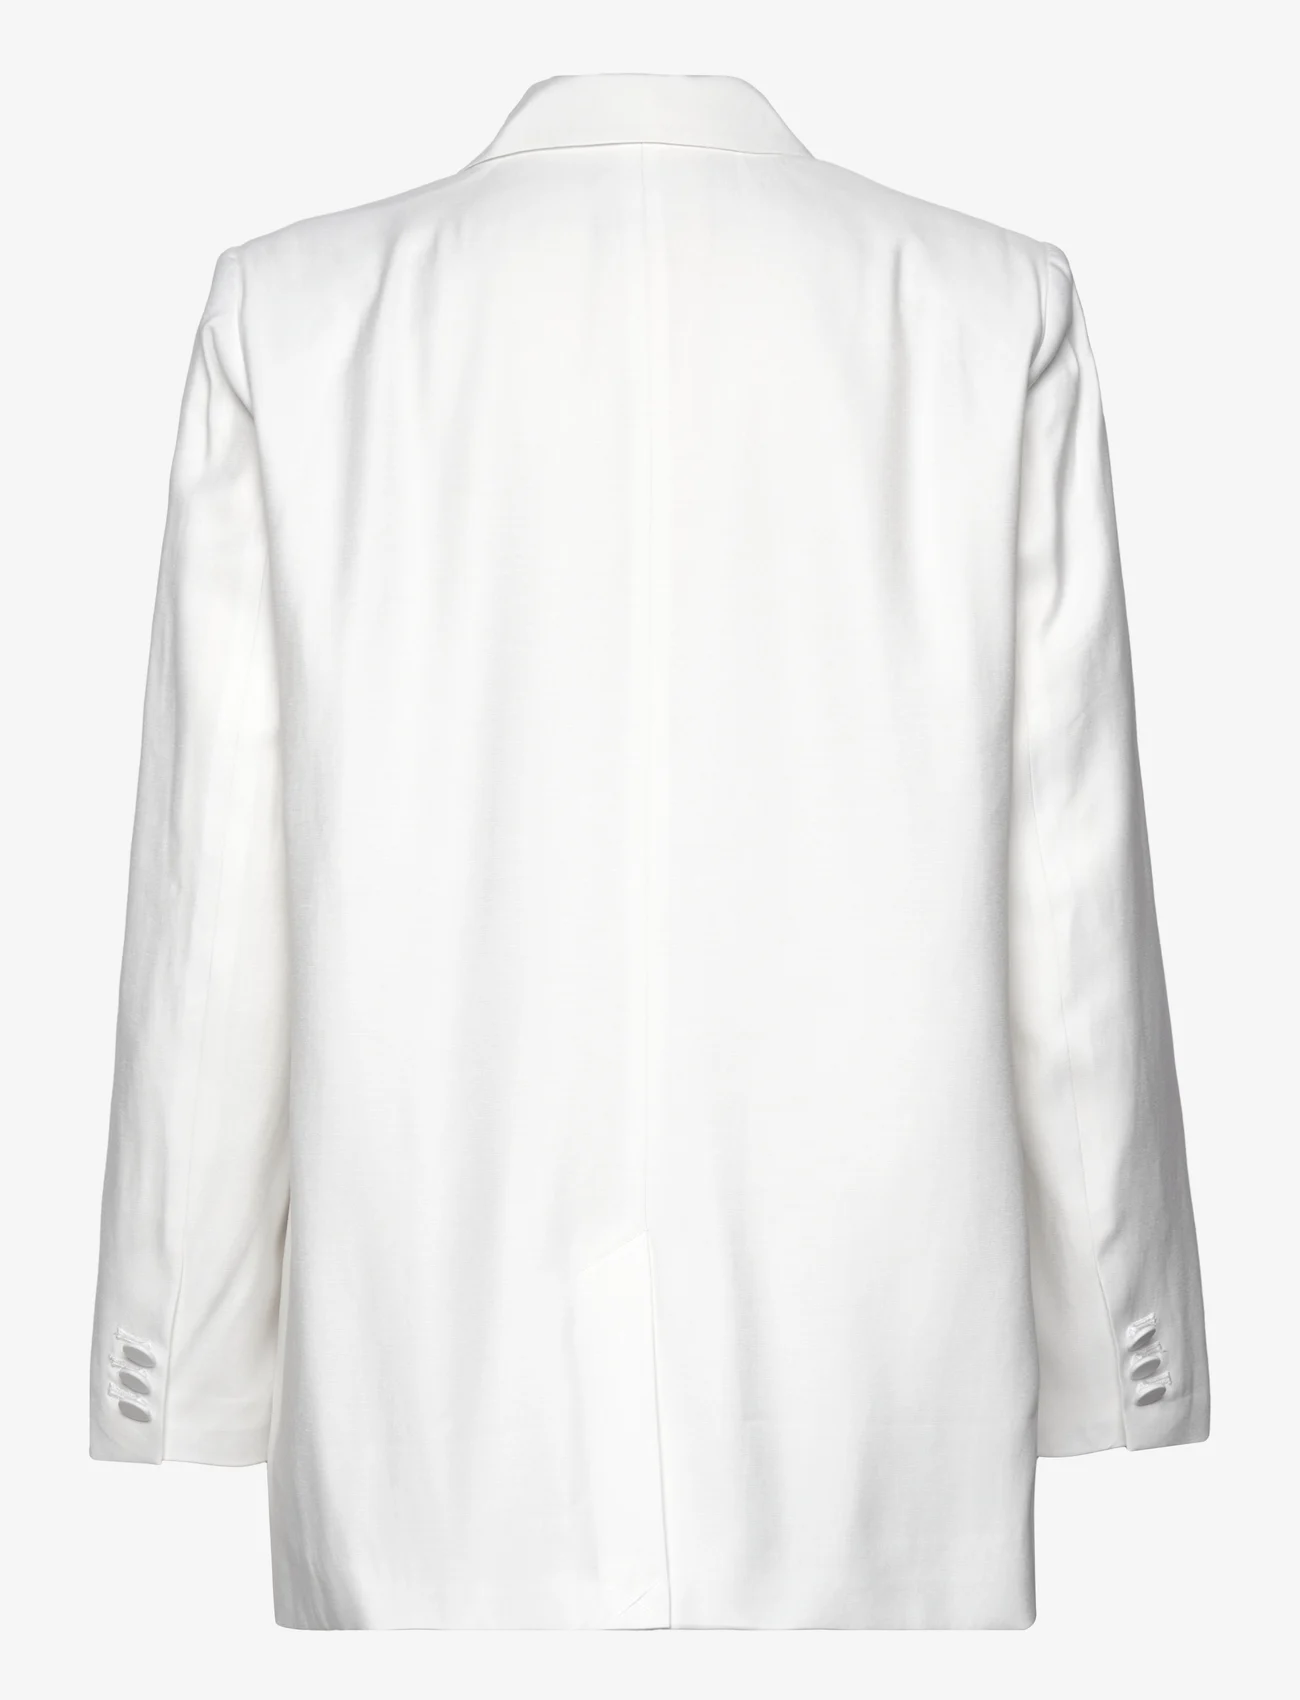 Second Female - Disa New Blazer - feestelijke kleding voor outlet-prijzen - bright white - 1